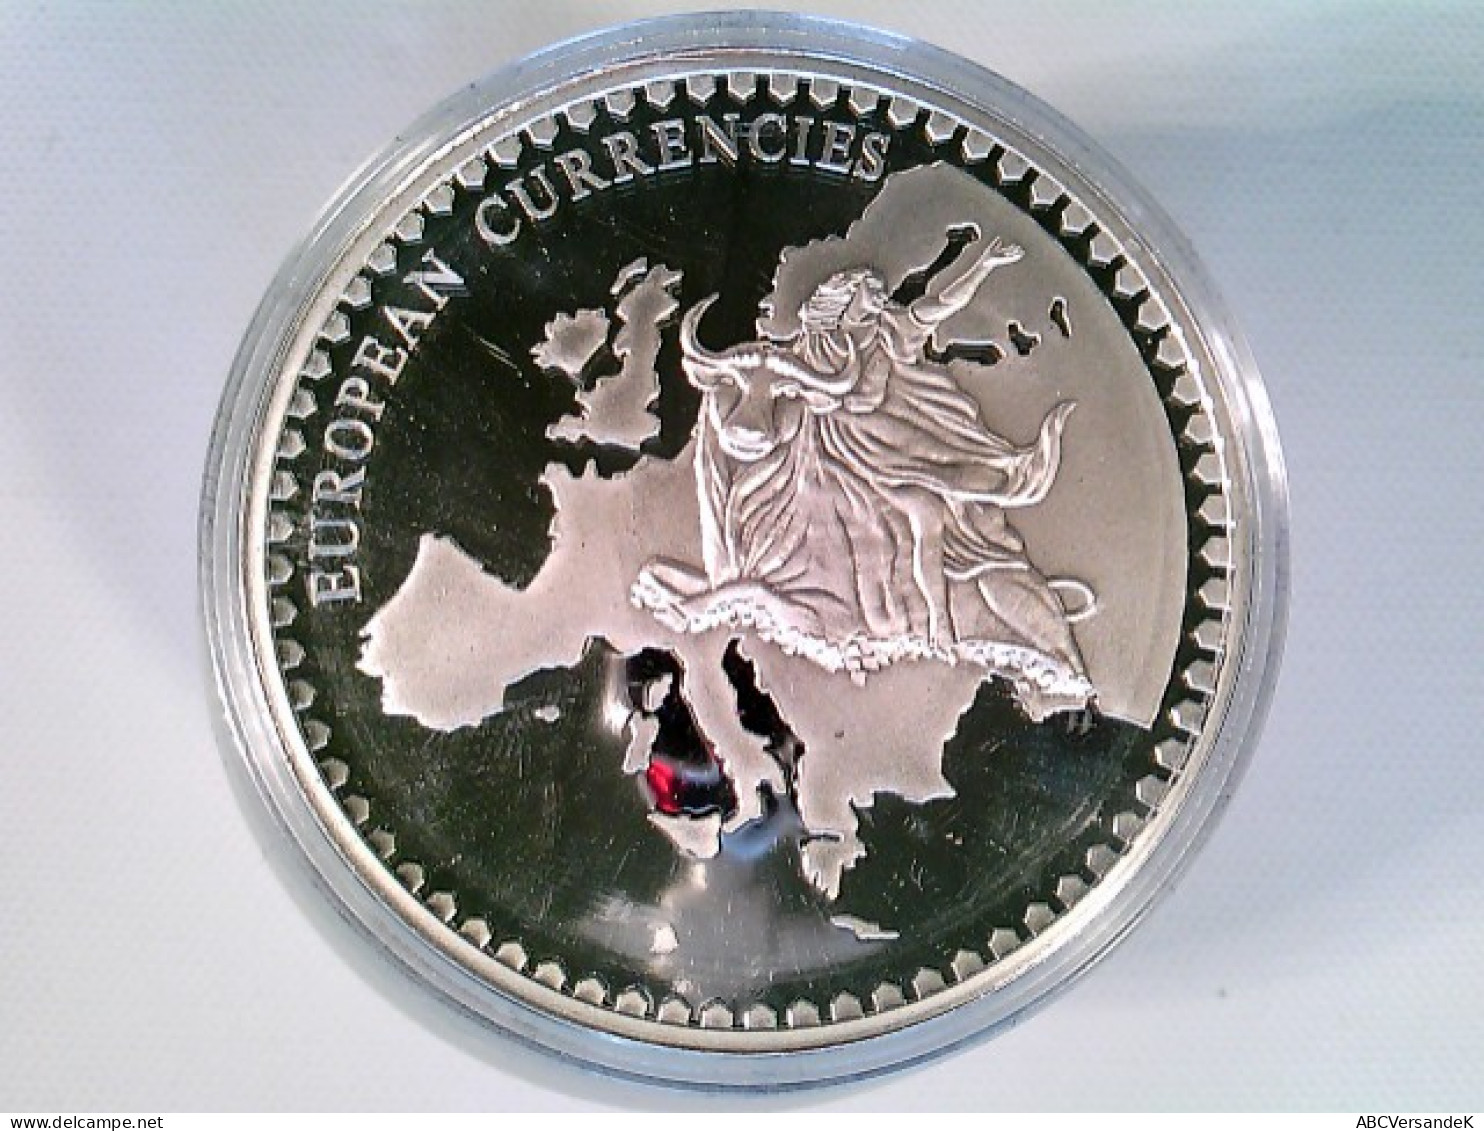 Münze/Medaille, Inlay Prägung Zypern, Sammlermünze 1996, Cu Versilbert Mit Vergoldetem Inlay - Numismatiek